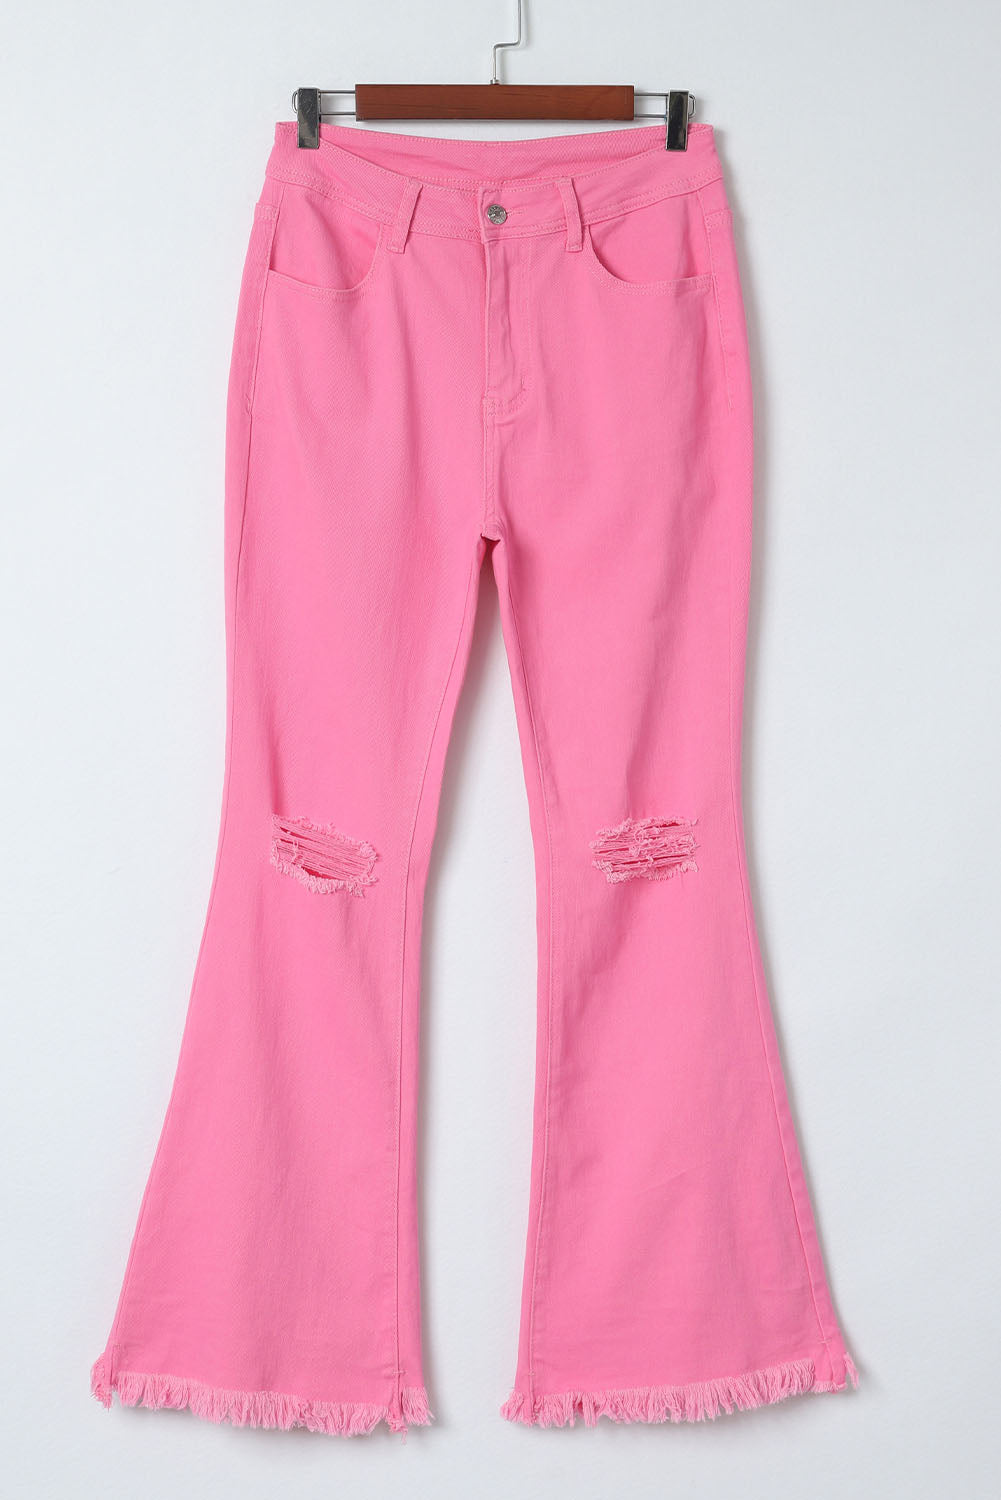 Pink Vintage High Waist Flare Leg Ripped Raw Hem Jeans - SELFTRITSS